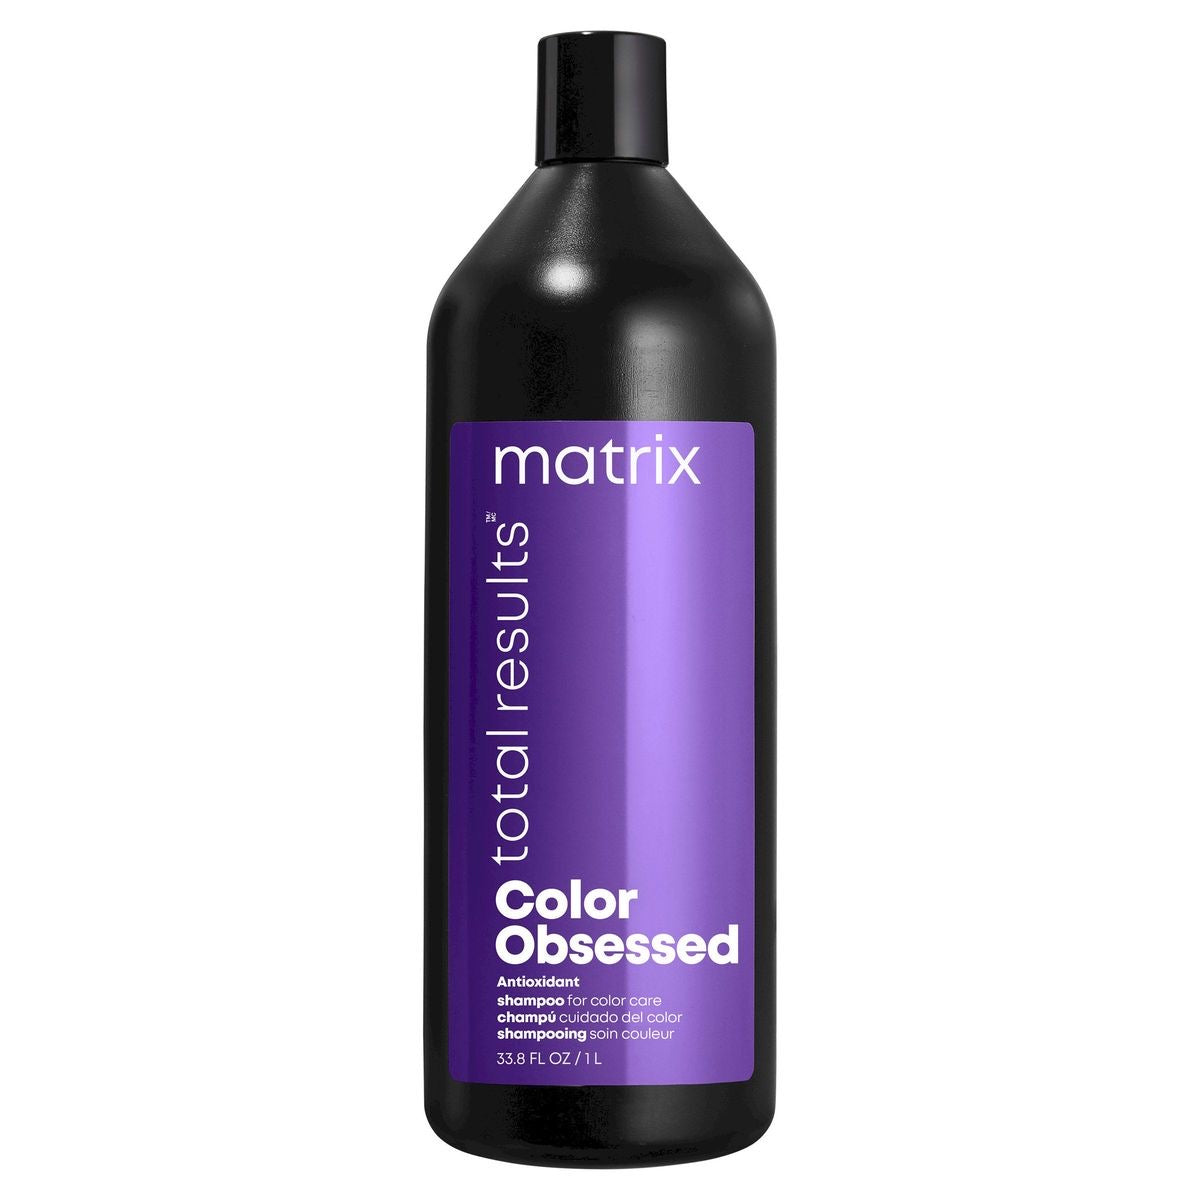 Matrix color obsessed shampoo liters